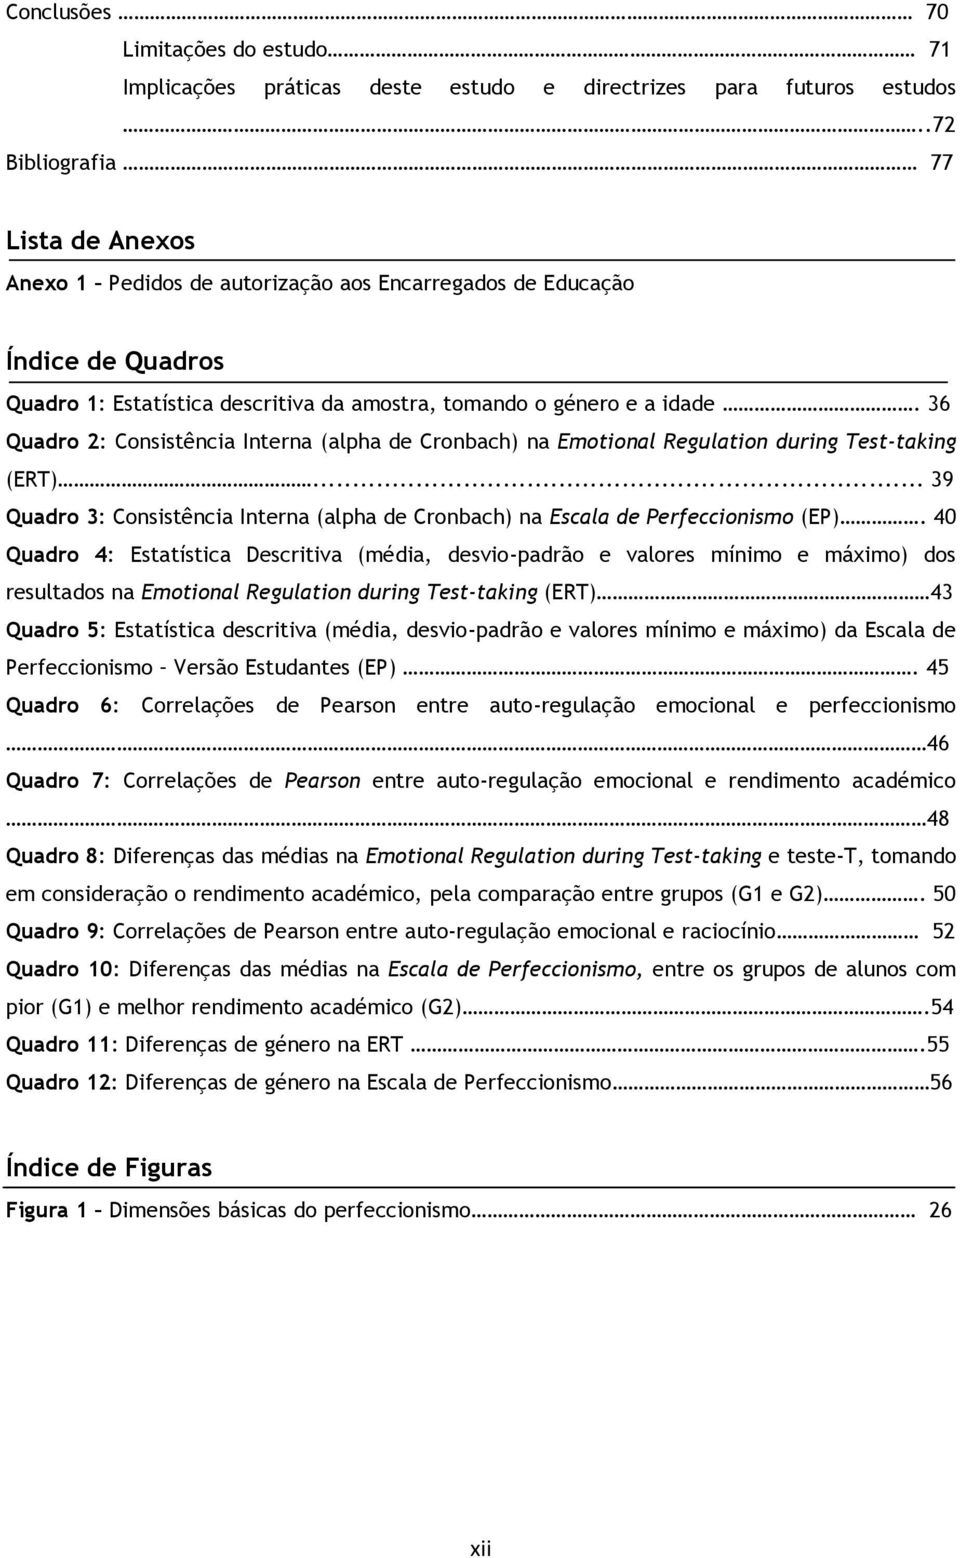 36 Quadro 2: Consistência Interna (alpha de Cronbach) na Emotional Regulation during Test-taking (ERT)... 39 Quadro 3: Consistência Interna (alpha de Cronbach) na Escala de Perfeccionismo (EP).